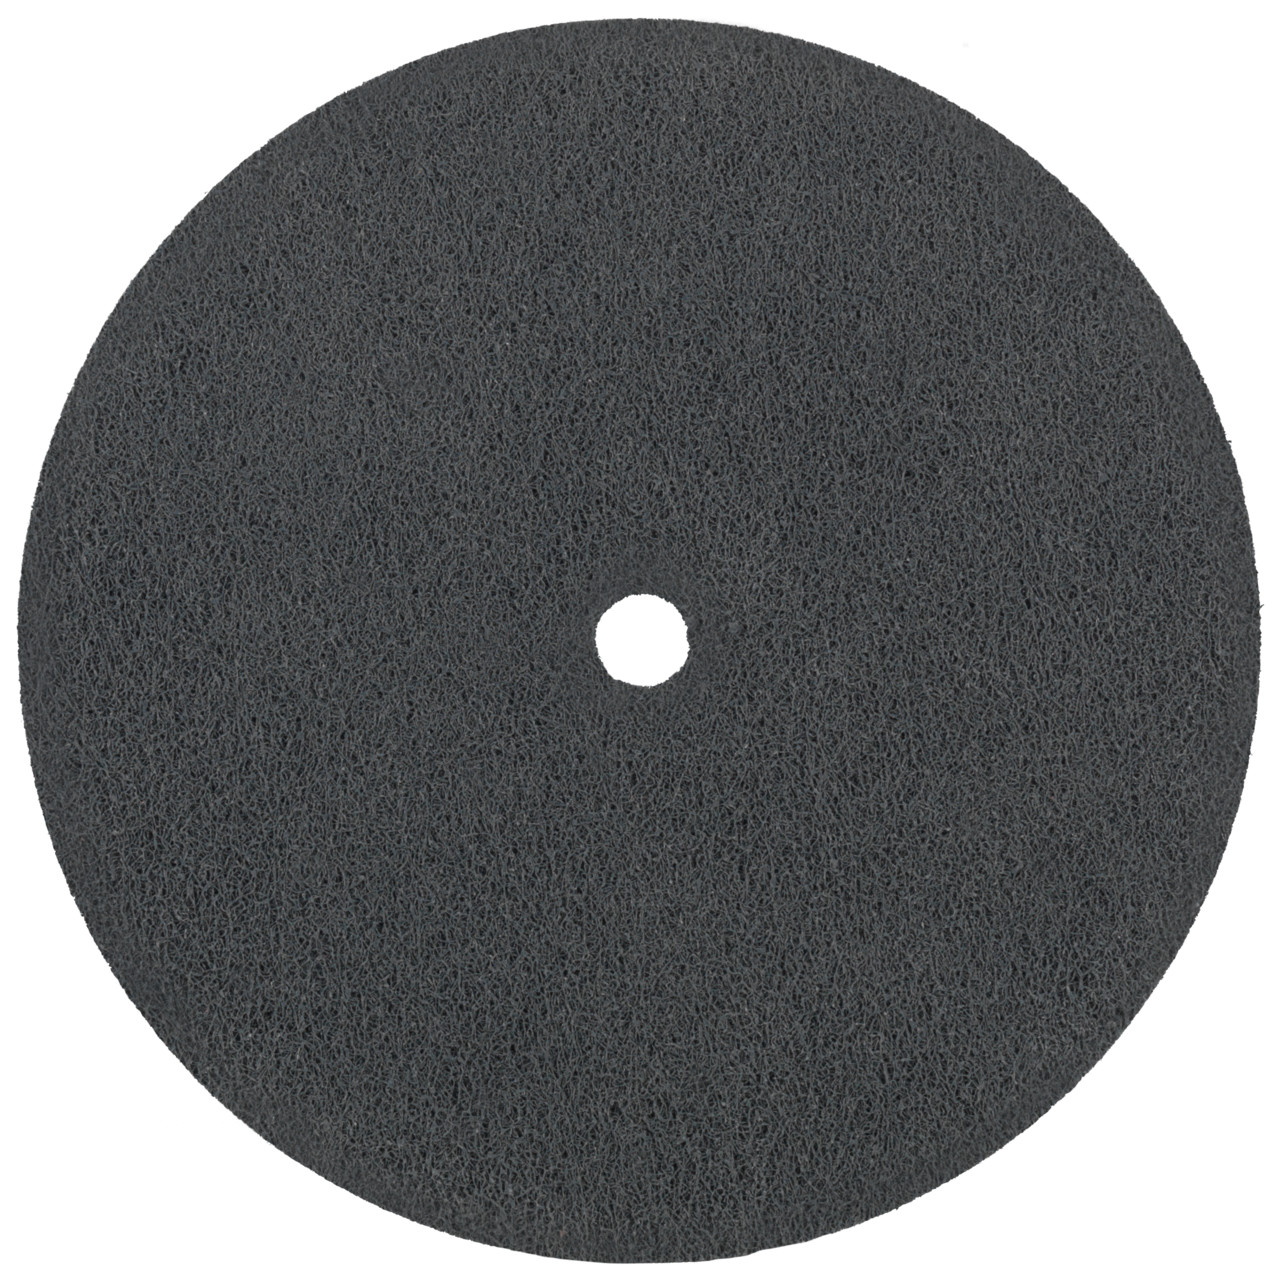 Tyrolit Compact disc pressati DxDxH 152x13x12,7 Inserto universale, 3 C FEIN, forma: 1, Art. 34190292